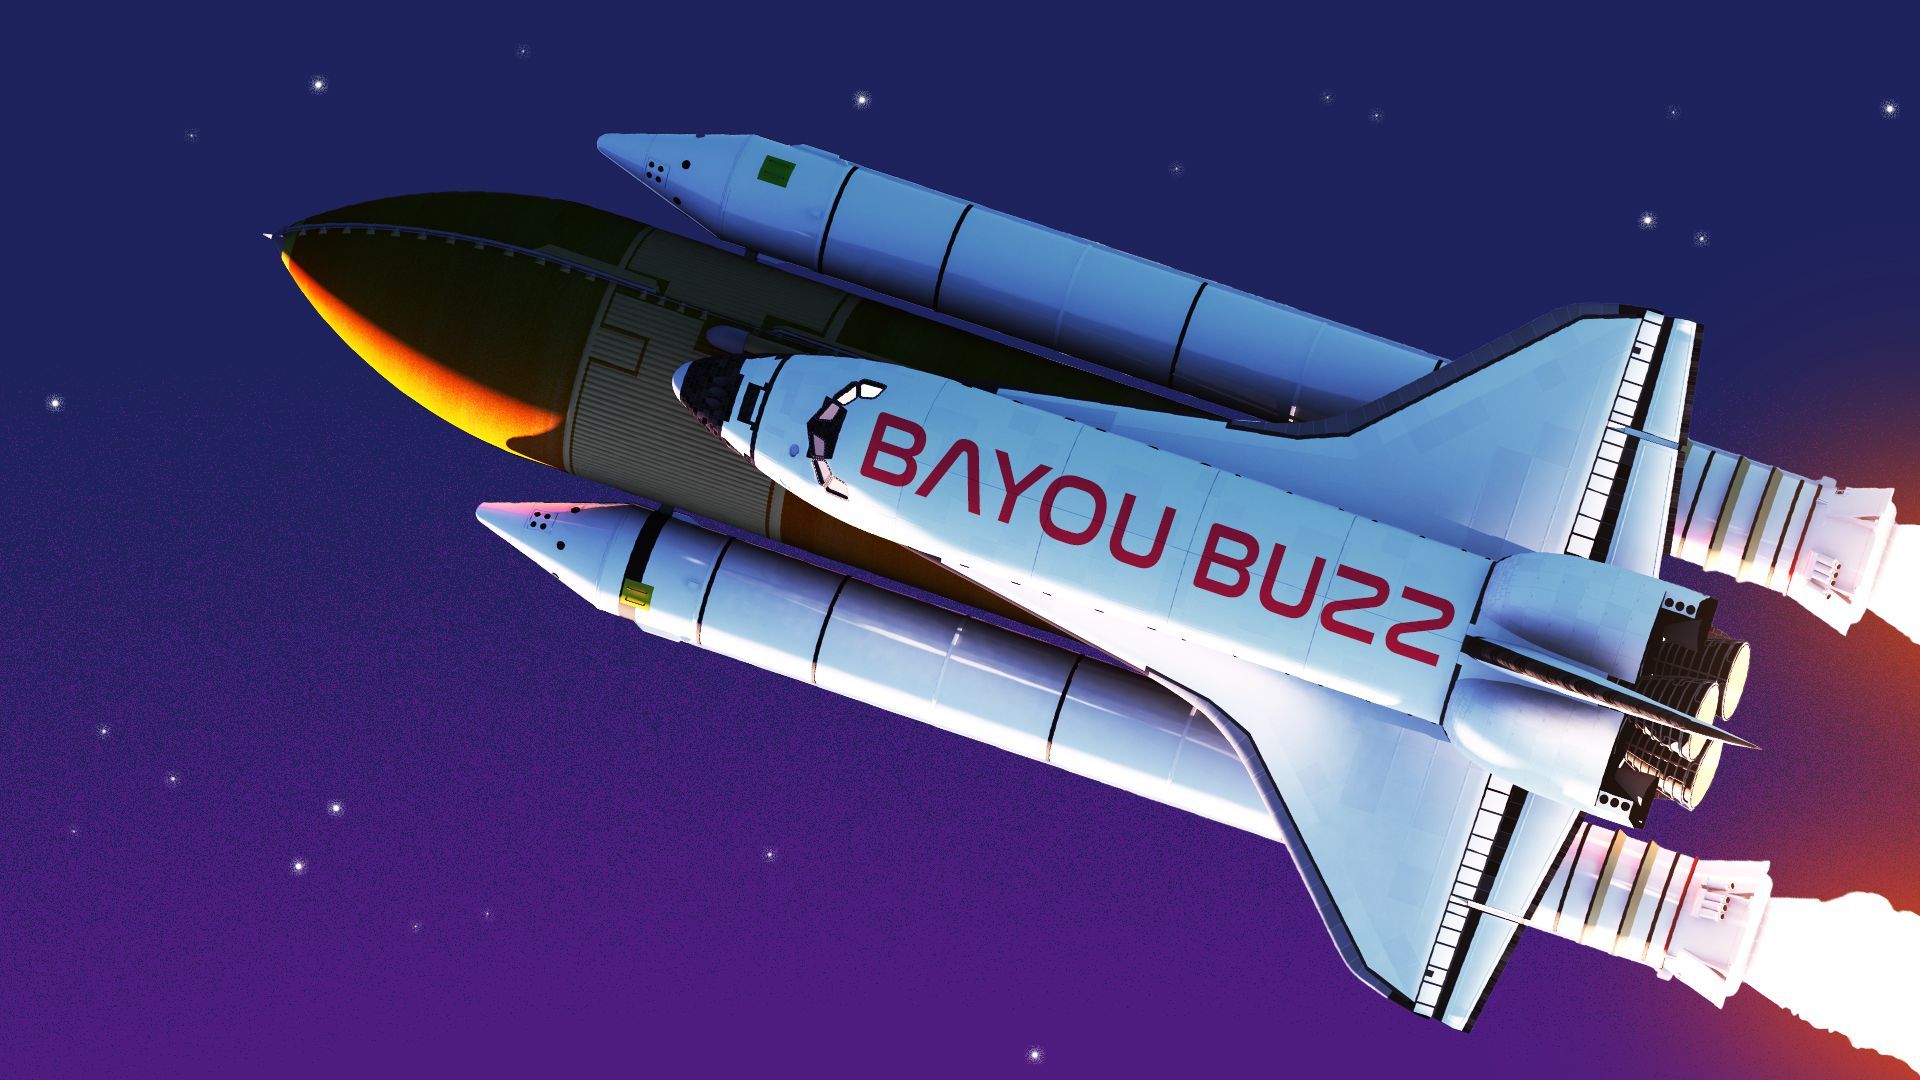 Illustration of a rocket ship labelled "Bayou Buzz."